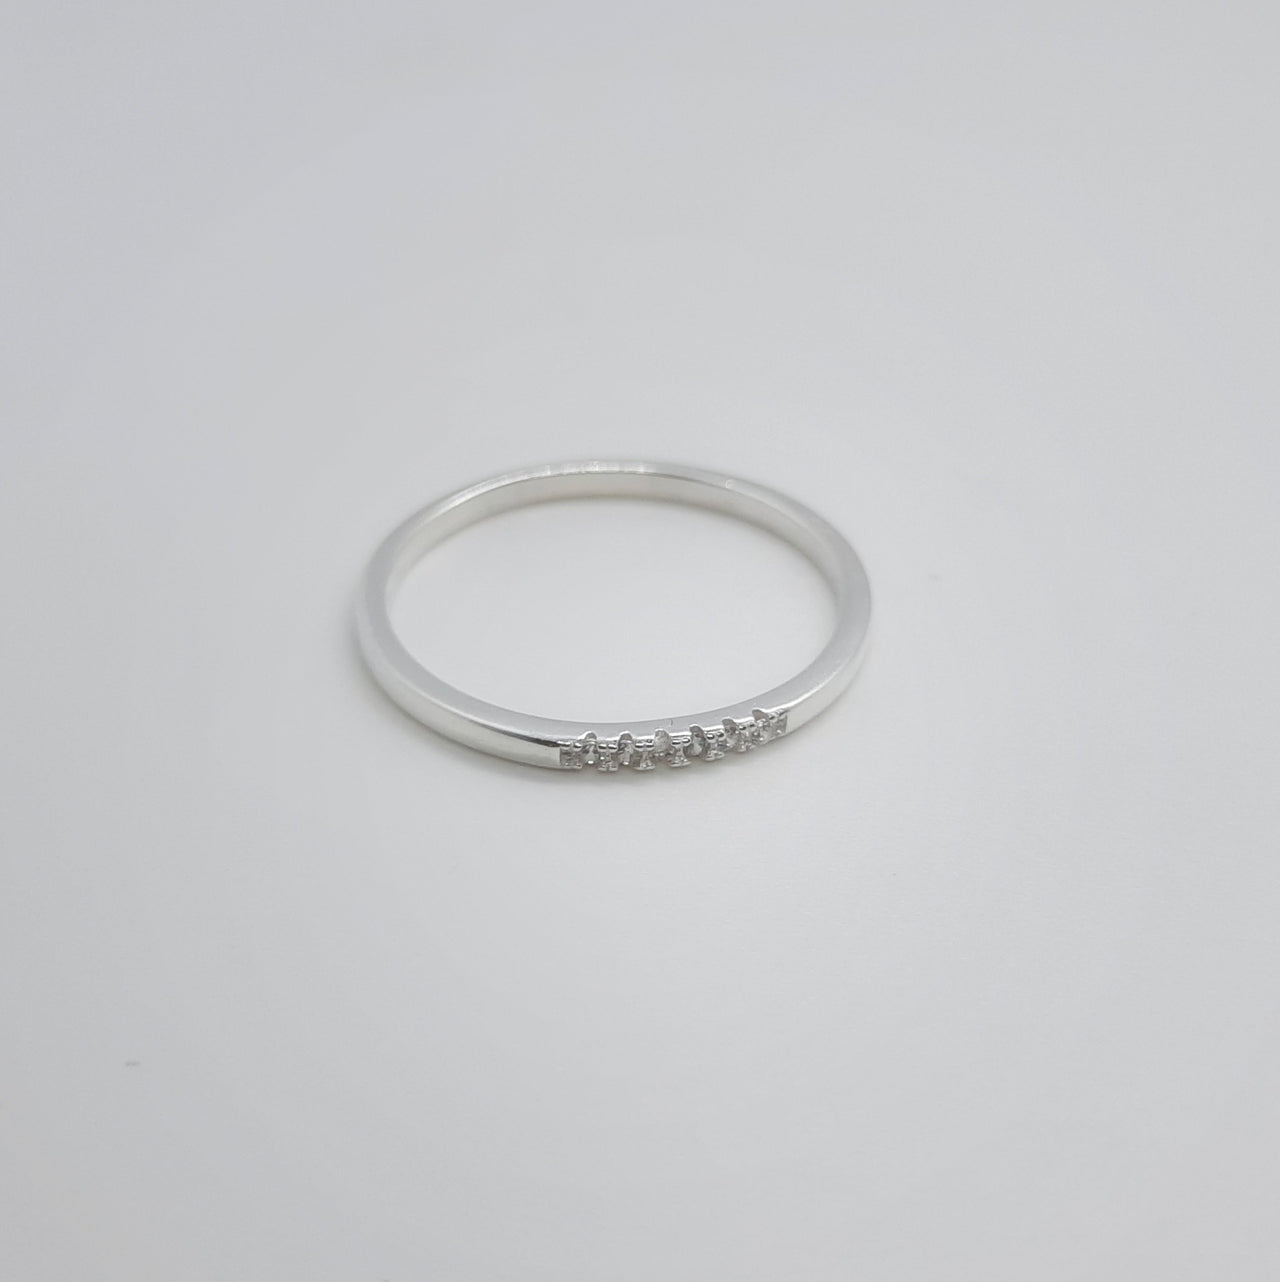 Feiner Ring aus 925 Sterlingsilber mit Zirkonien Ringe KOOMPLIMENTS